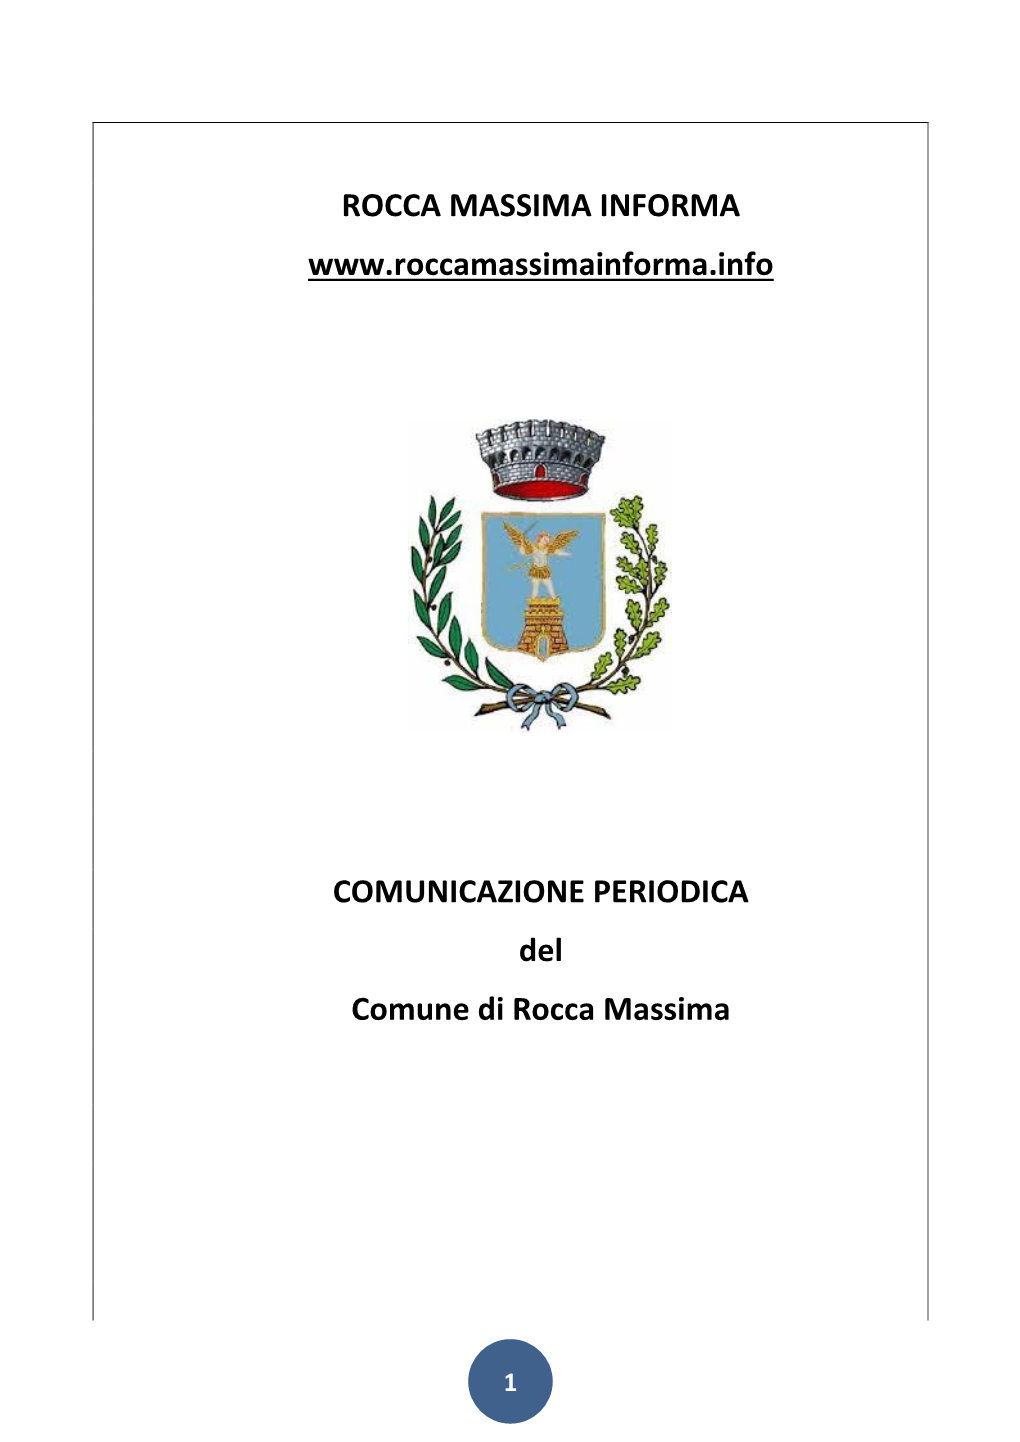 Rocca Massima Informa